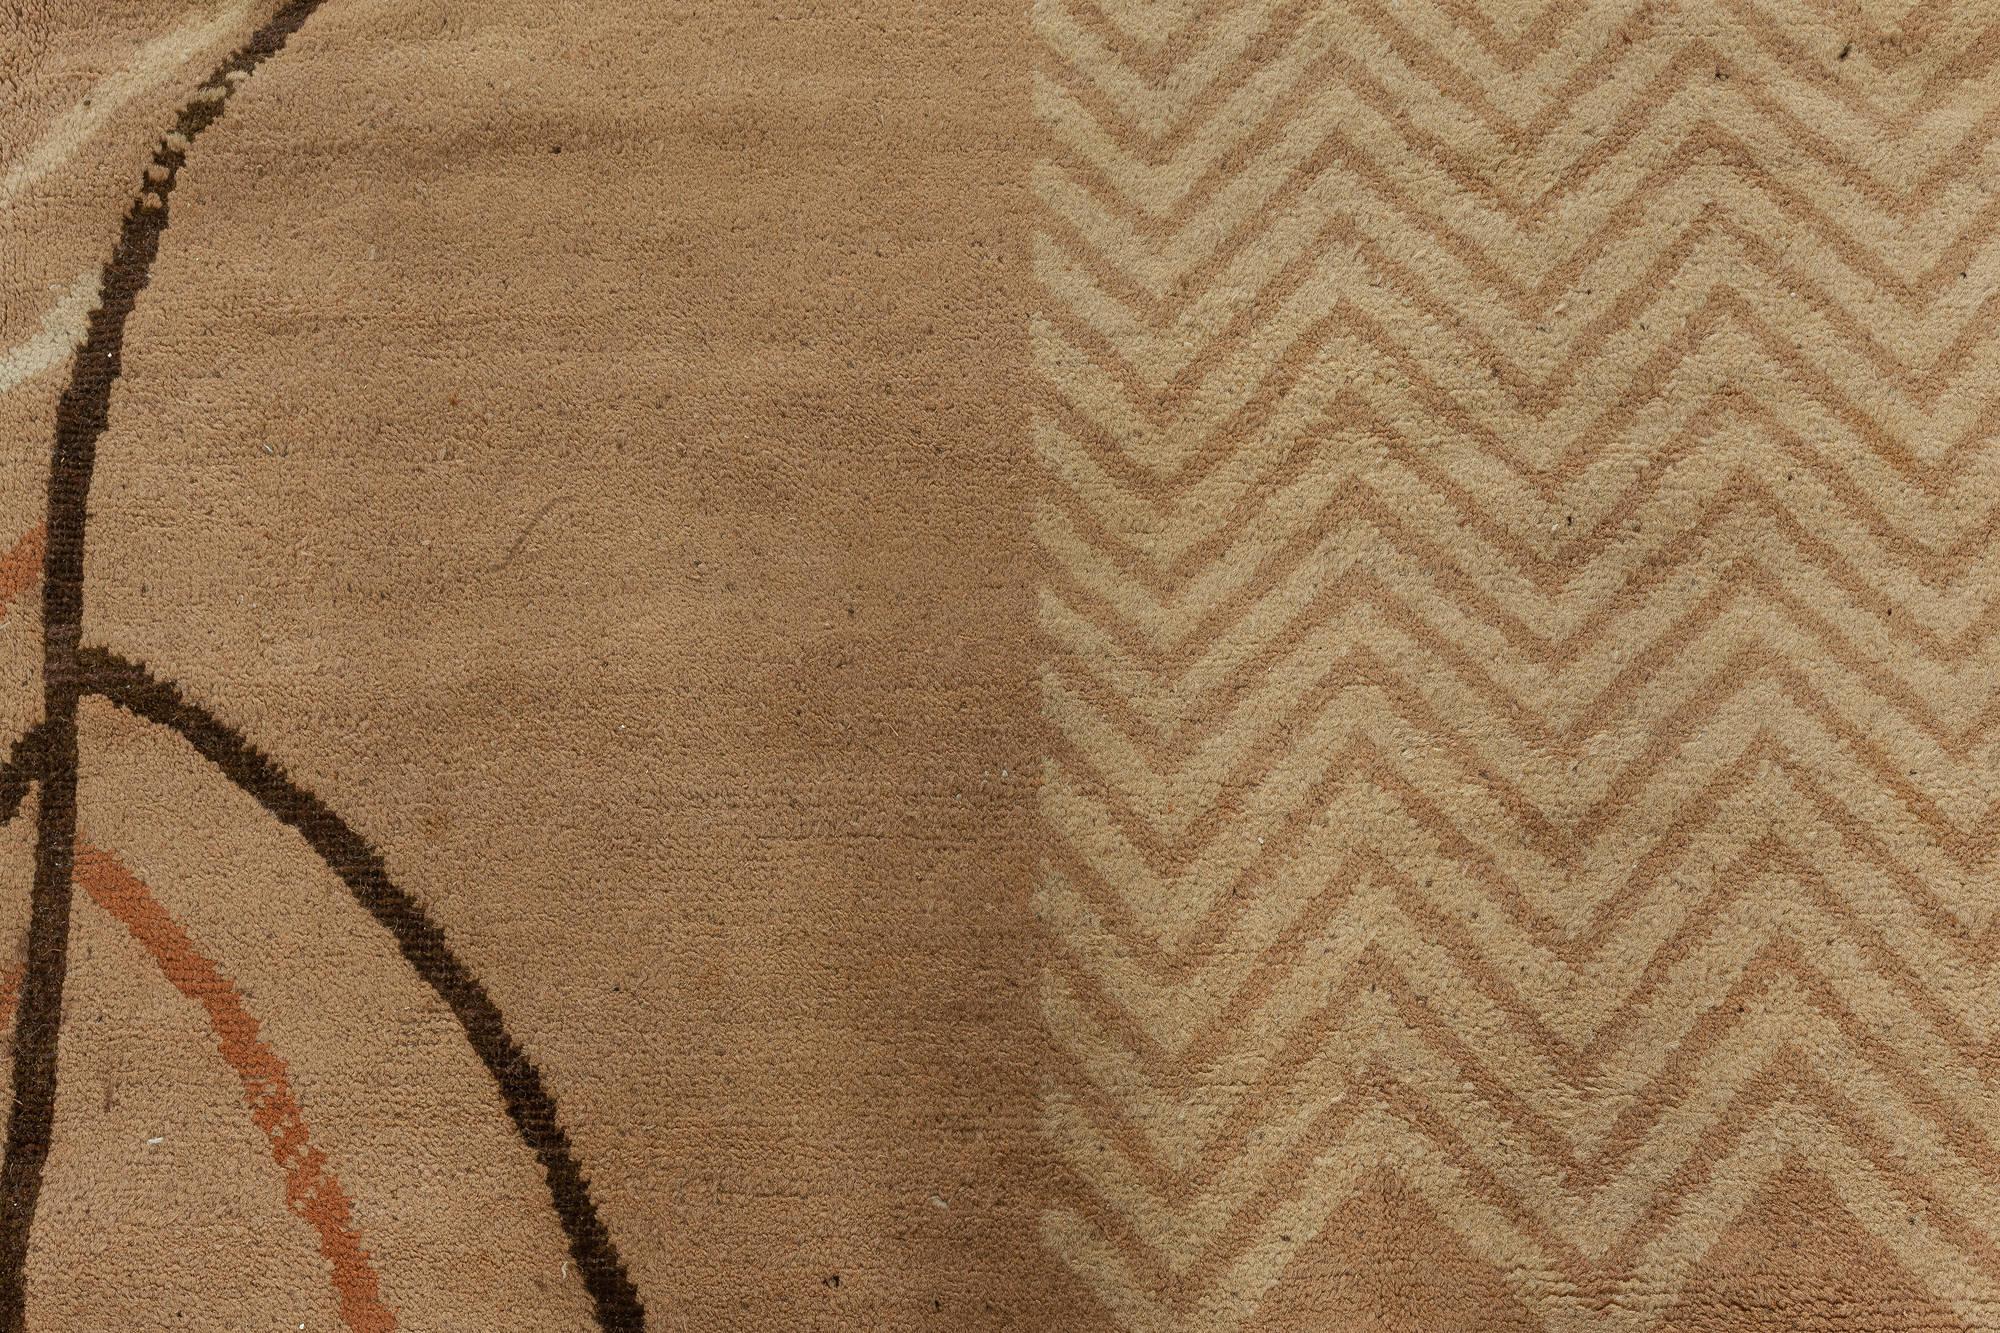 Vintage Art Deco Camel, beige, brown handwoven wool rug
Size: 13'5